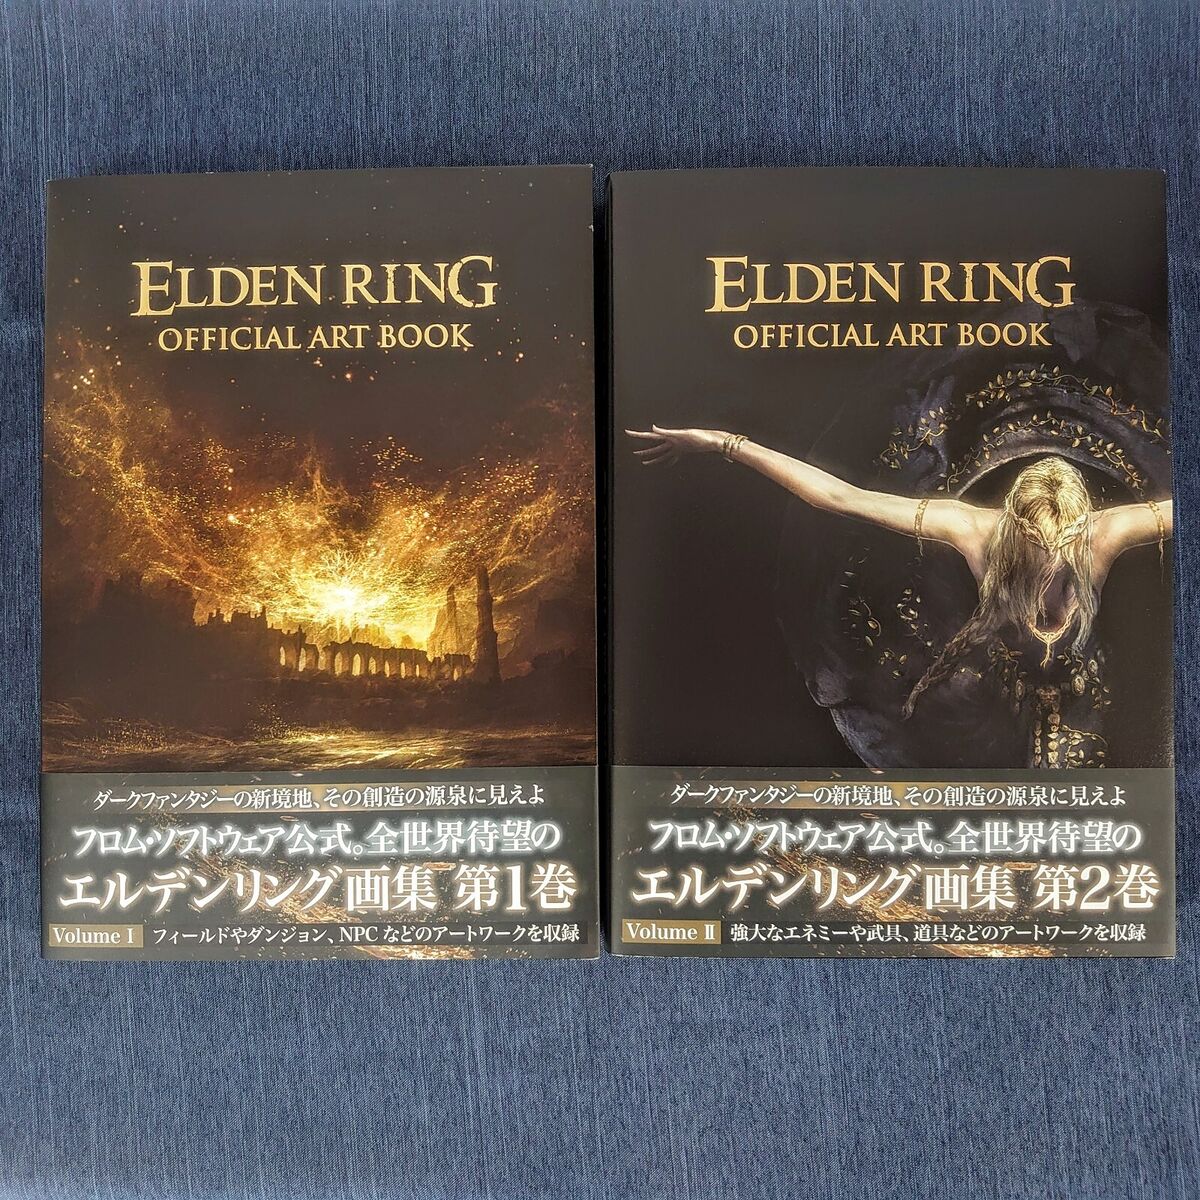 ELDEN RING OFFICIAL ART BOOK Volume II - KADOKAWA - New Japan F/S